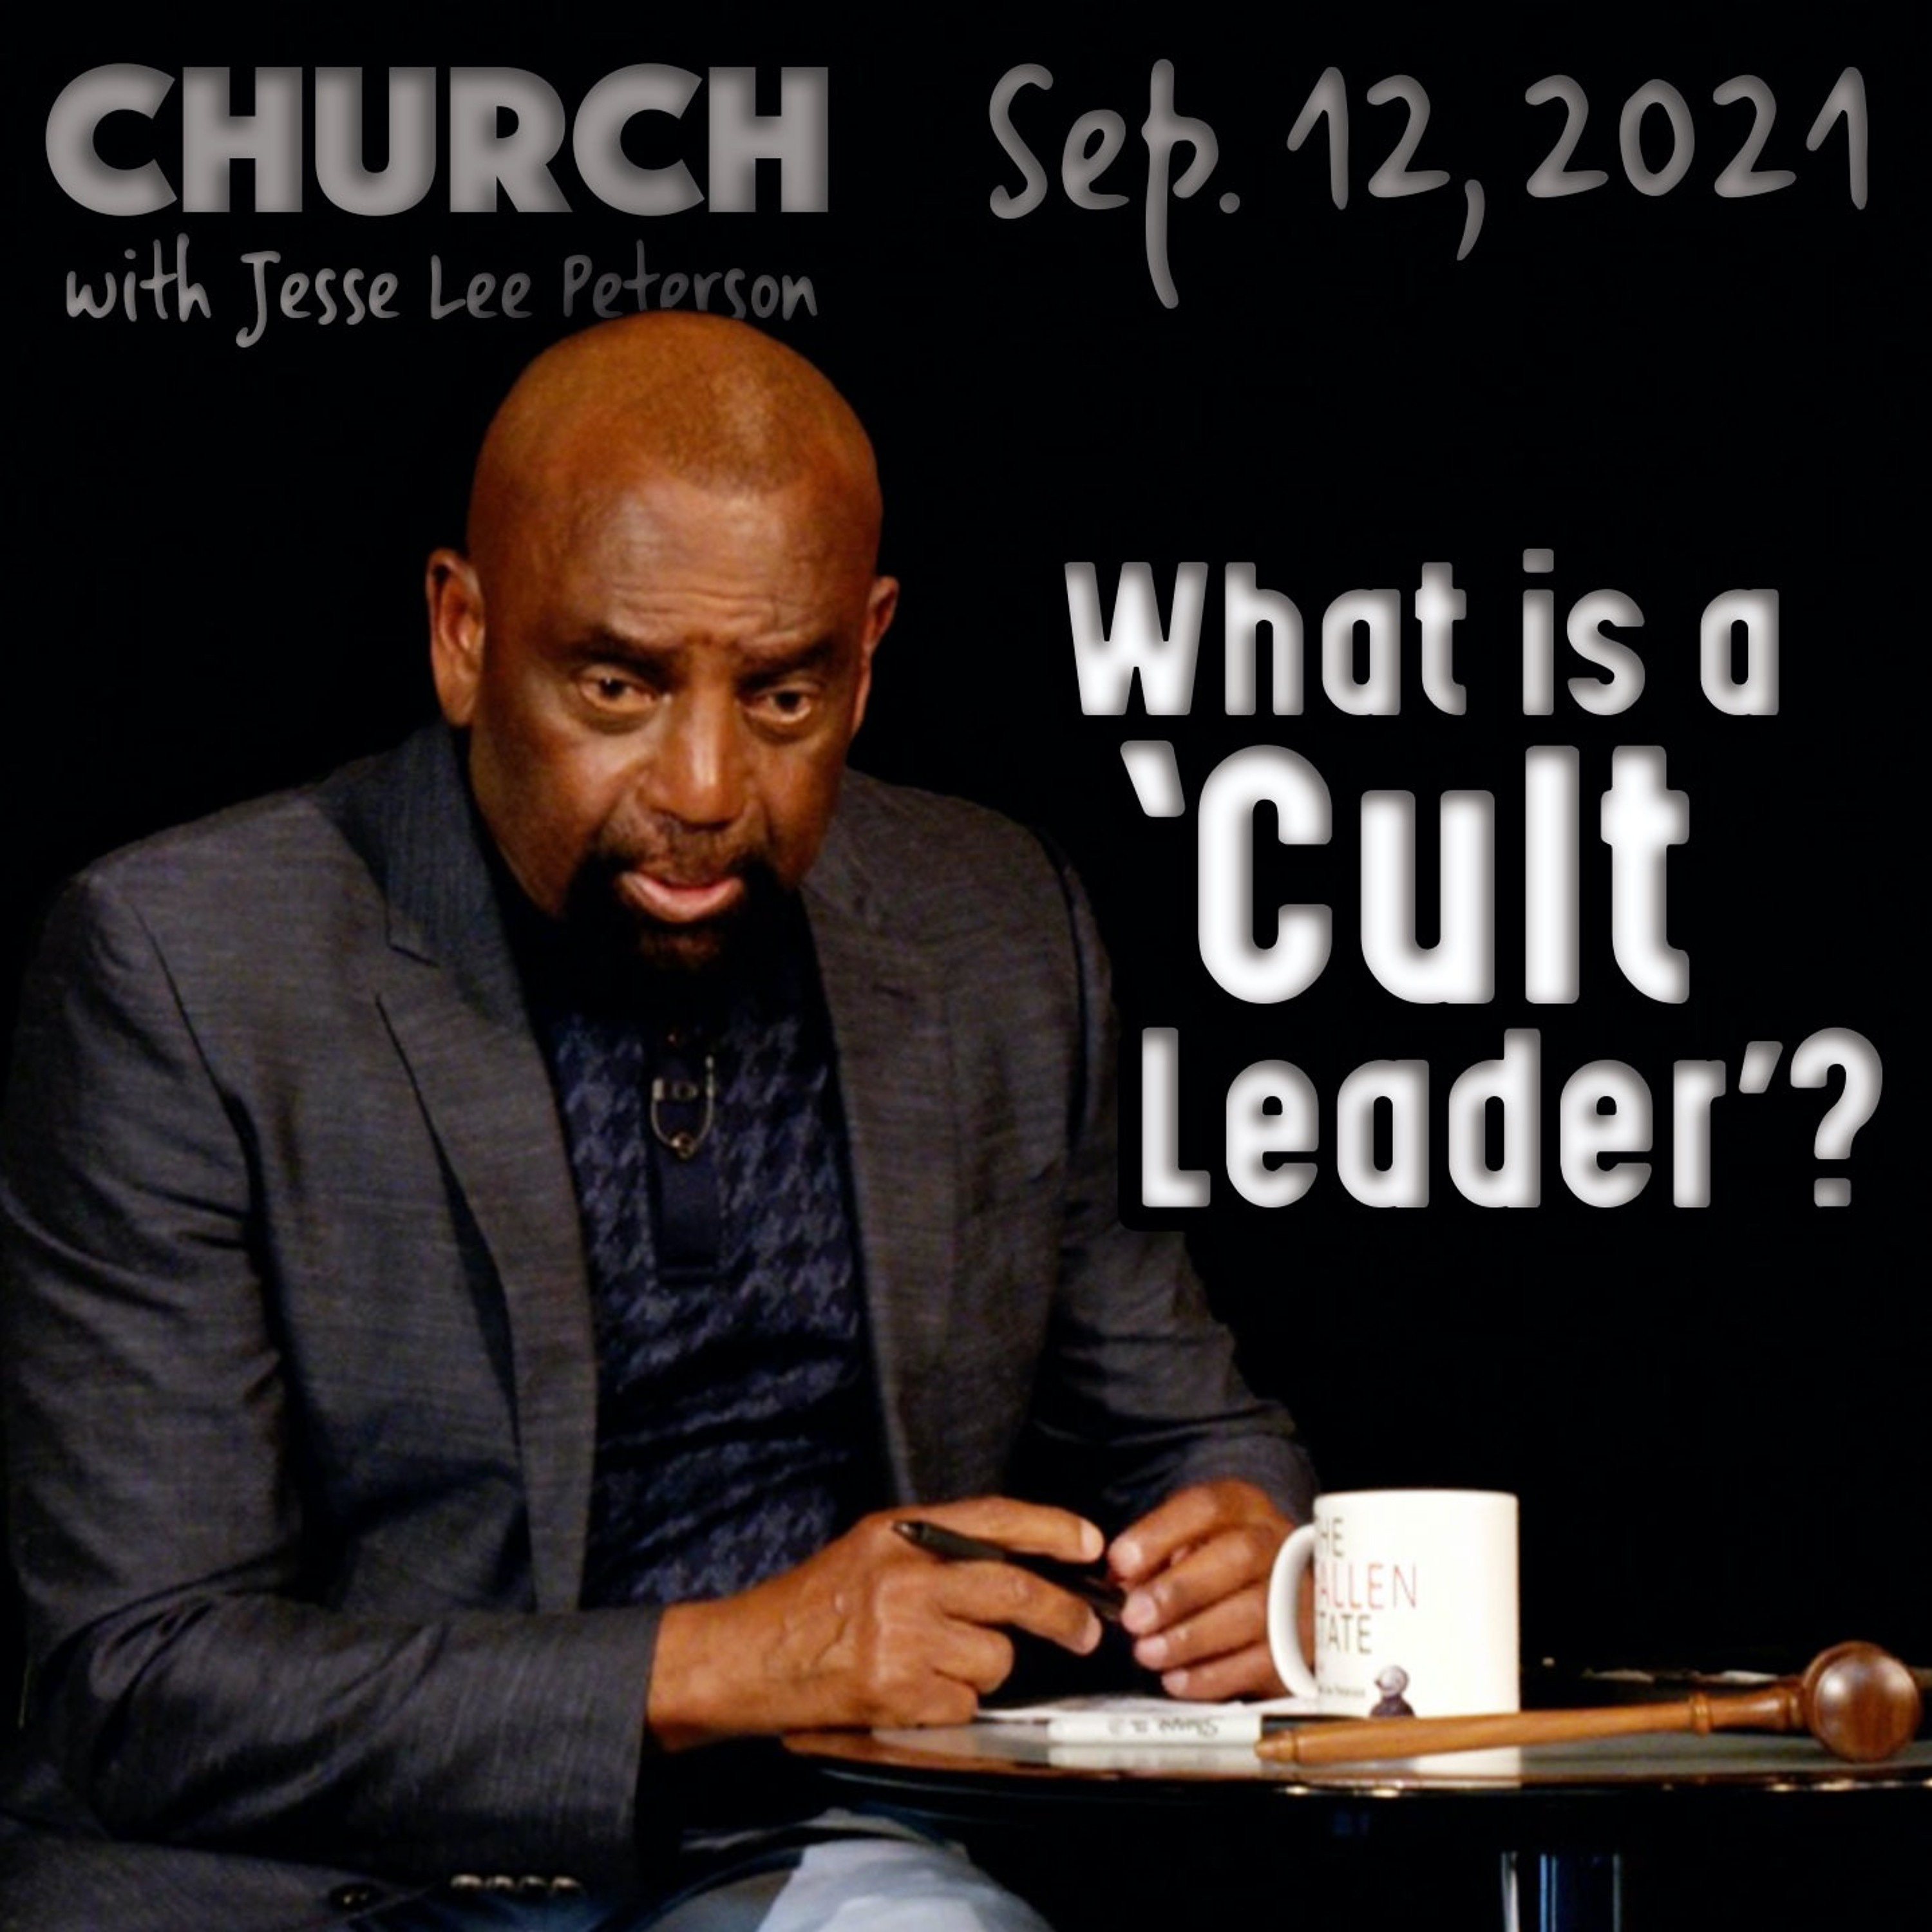 09/12/21 Whose Fault: Cult Leader or Followers? (Church)